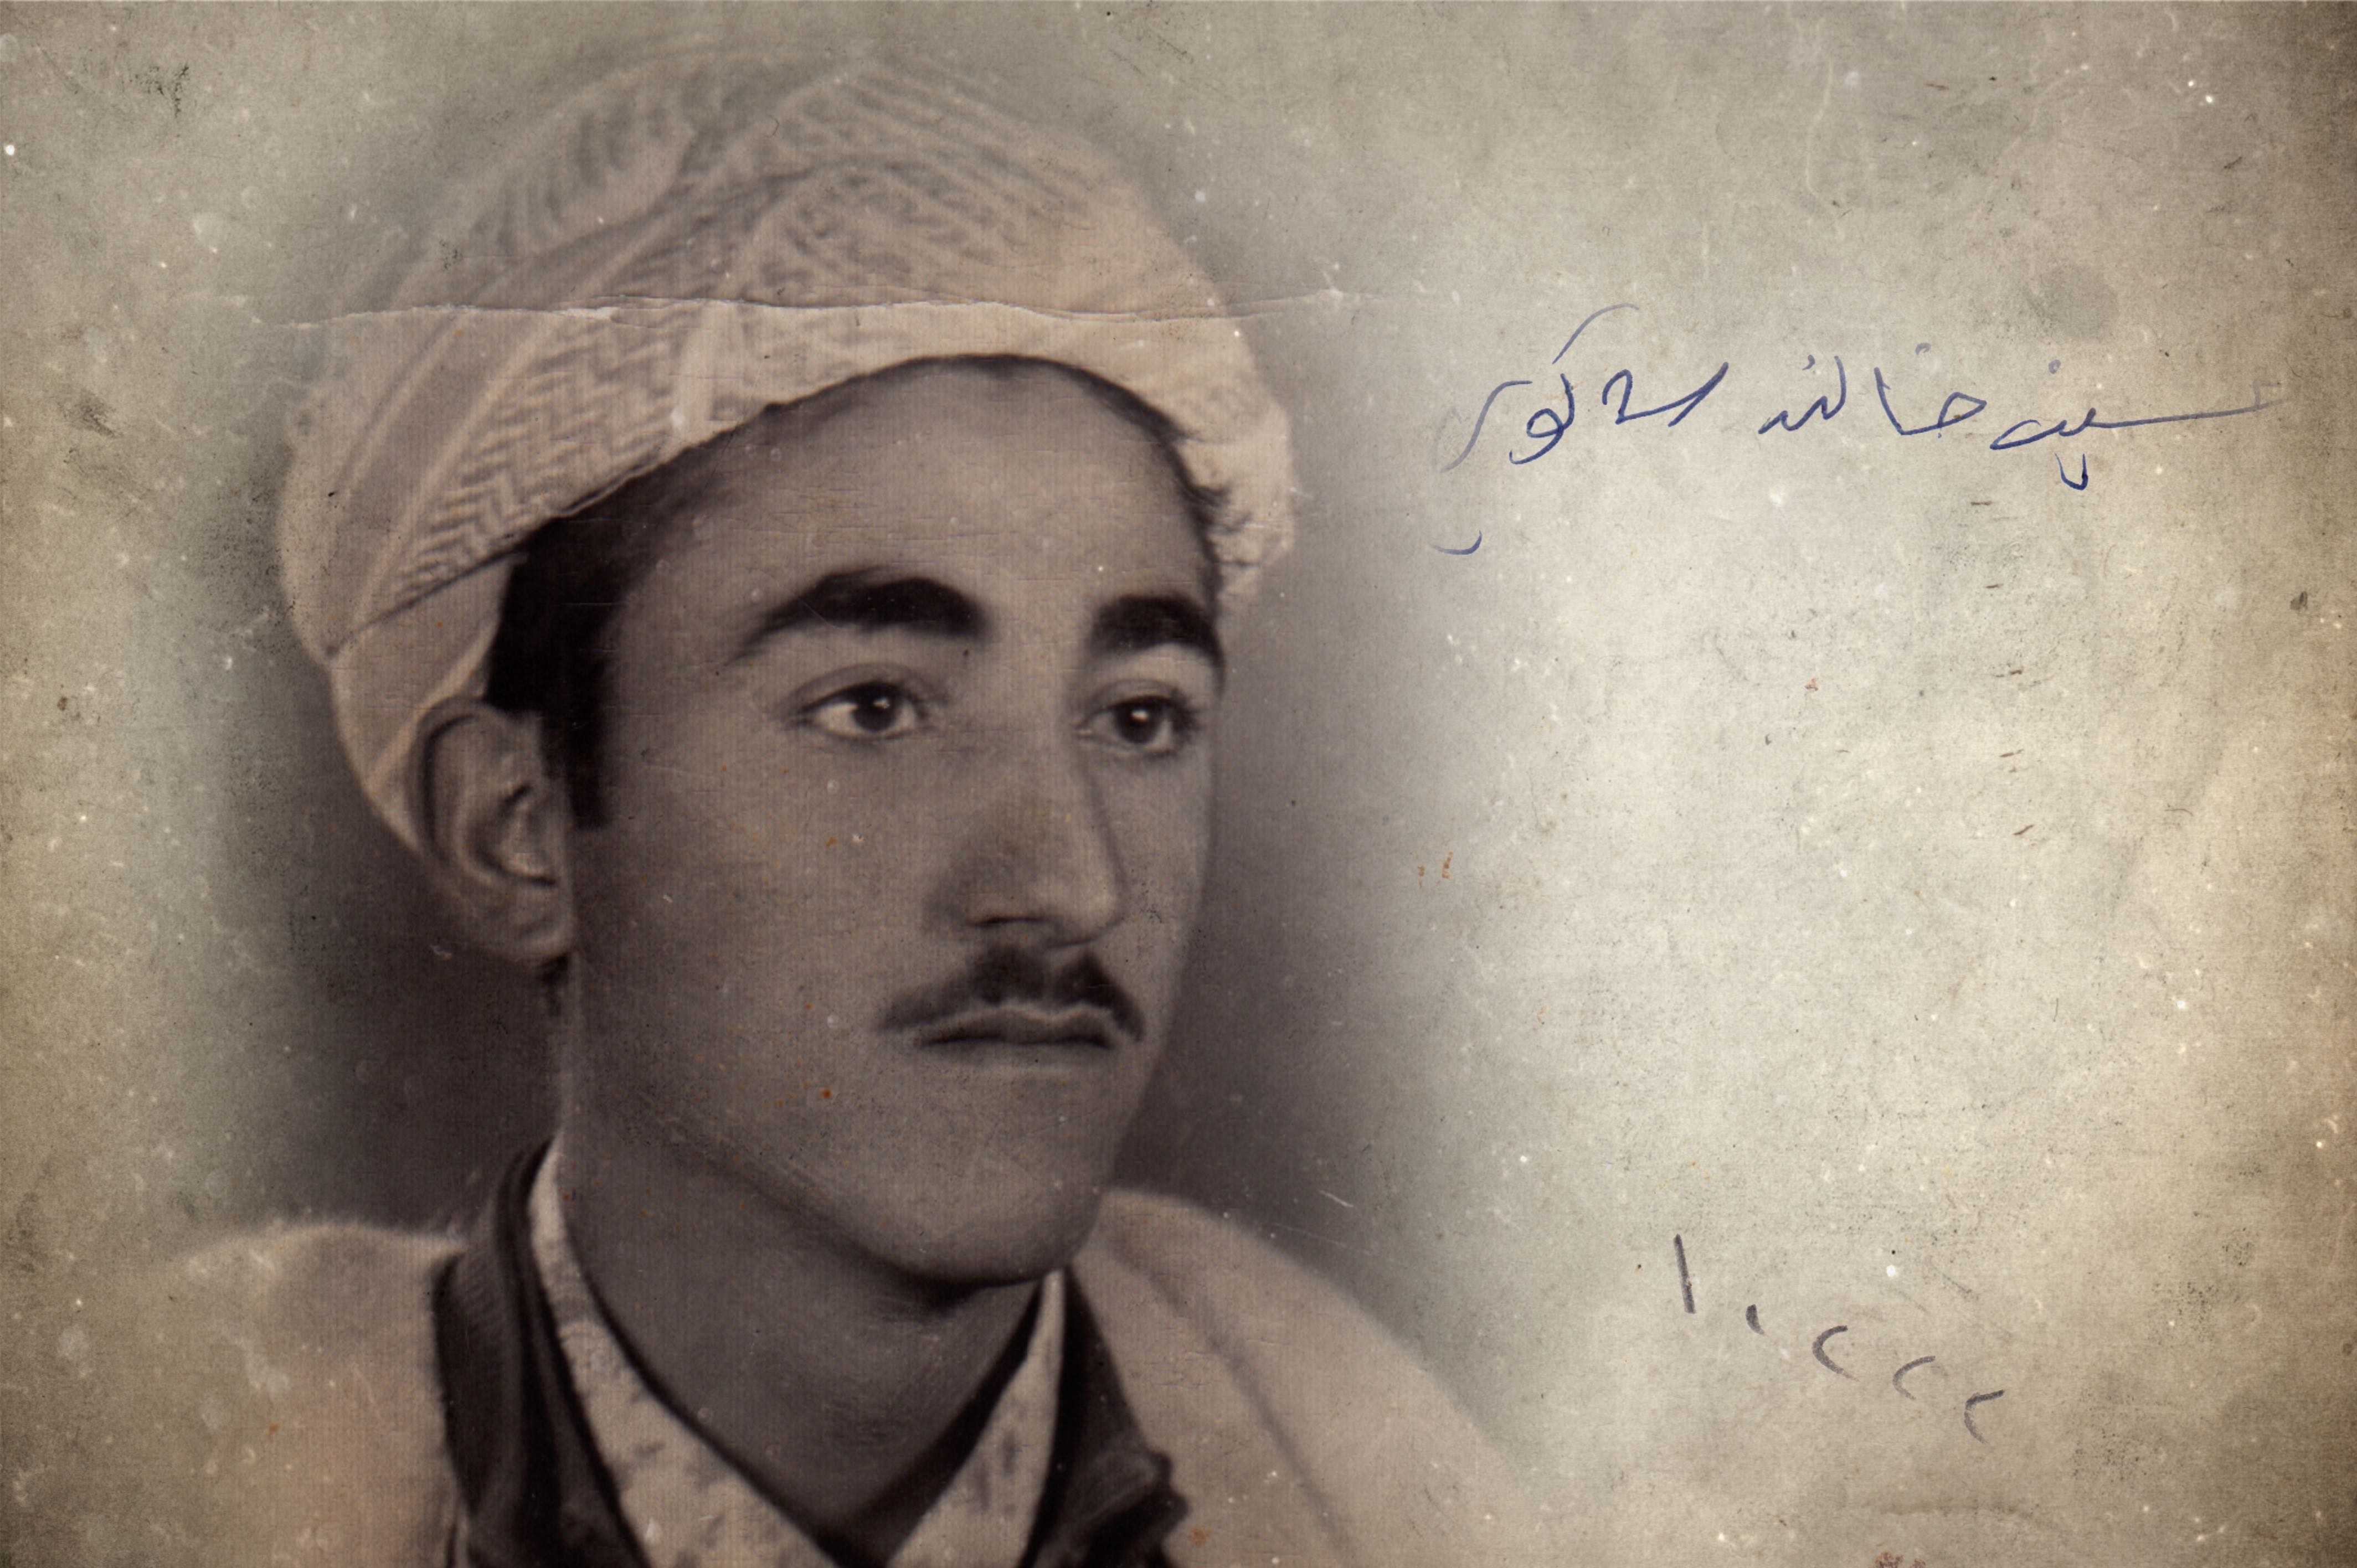 PORTRAITS OF THE MISSING BARZANI MEN